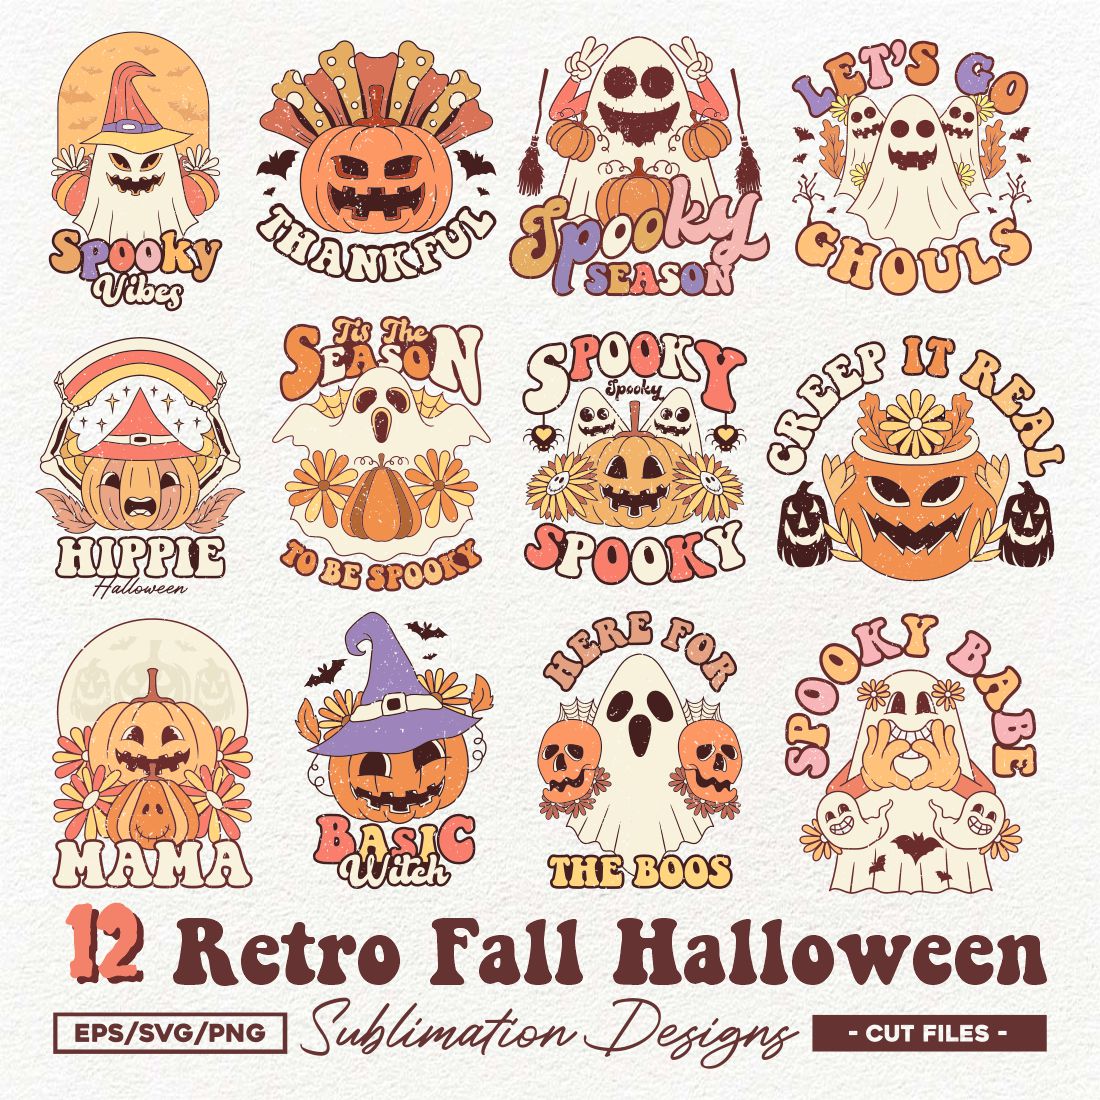 Retro Cute Fall Halloween Sublimation Designs Bundle cover image.